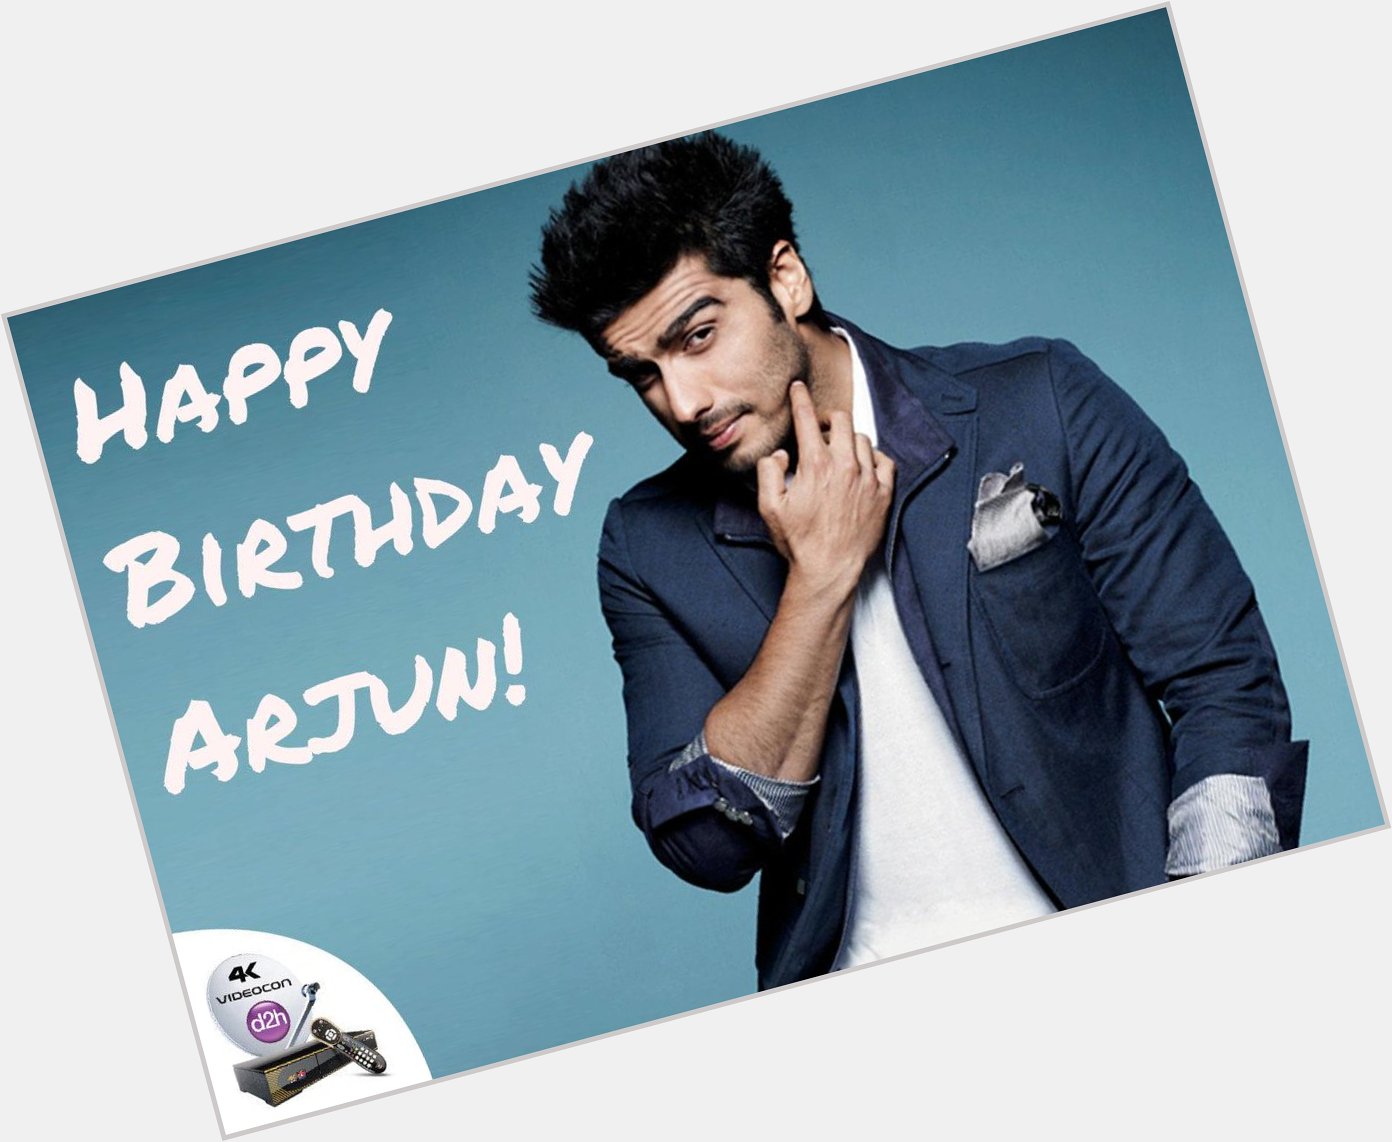 Happy Birthday Arjun Kapoor!
Join us in wishing the Bollywood heartthrob a wonderful year ahead. 